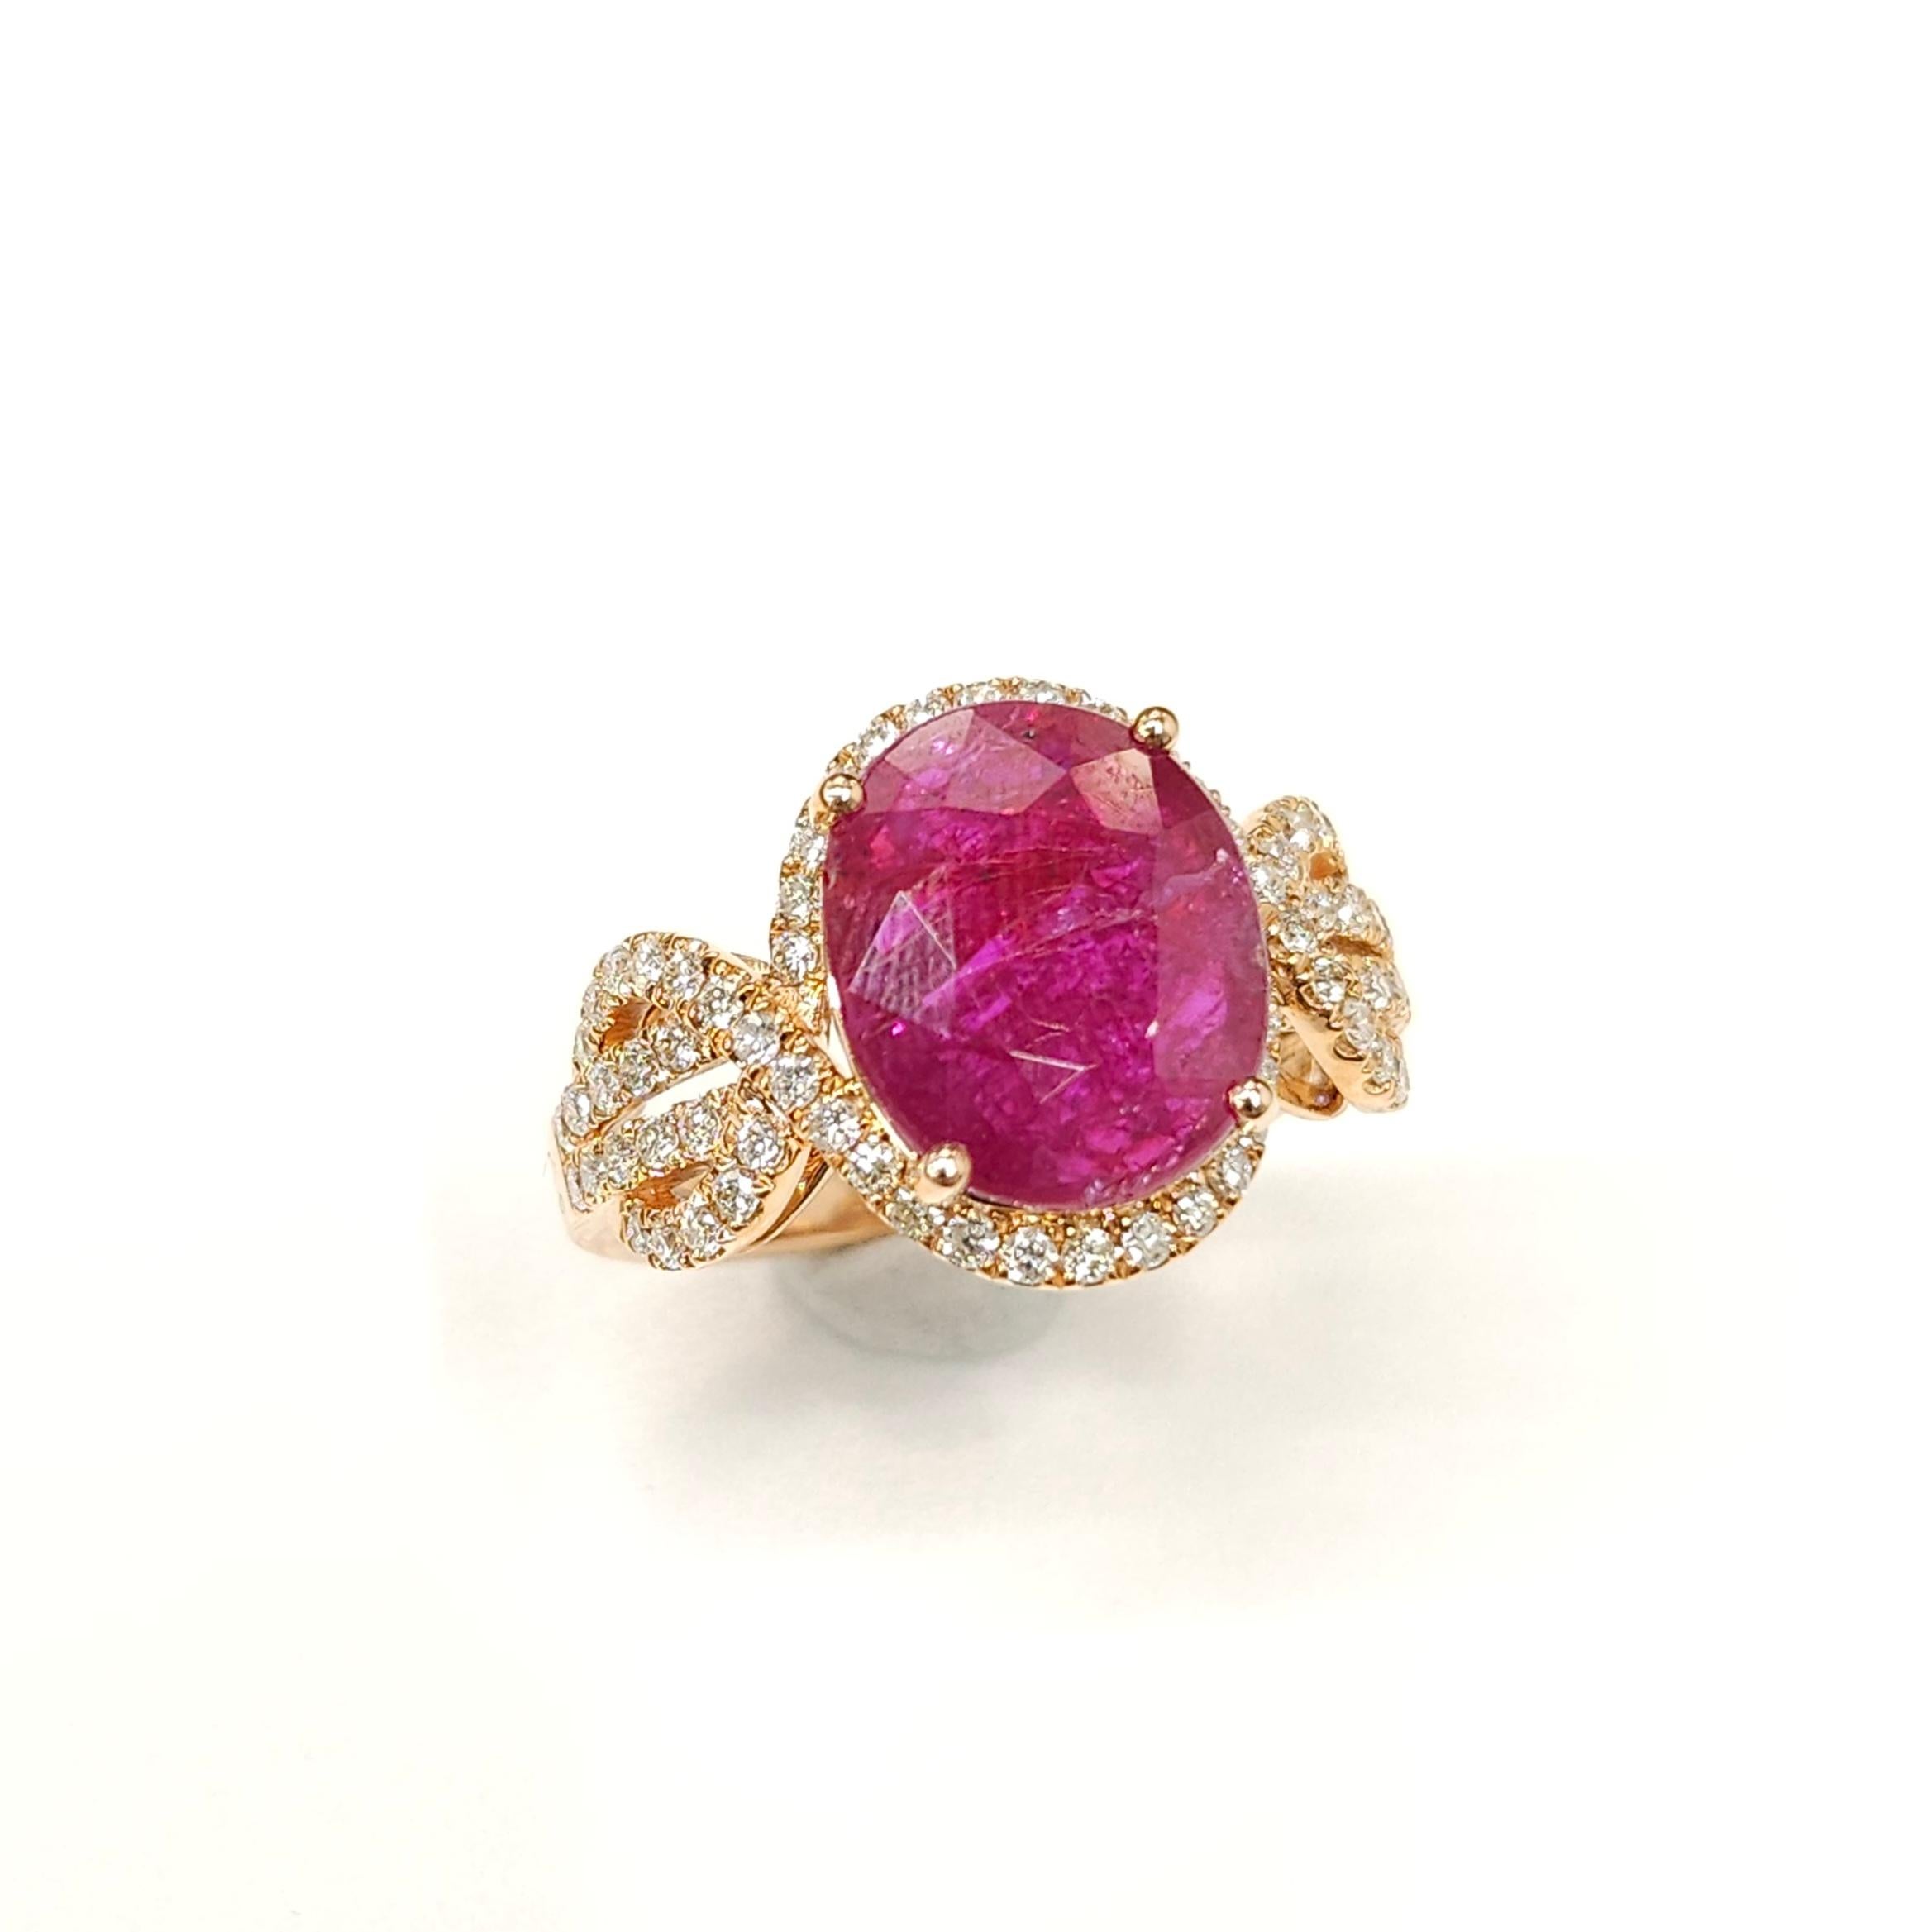 IGI Certified 4.02 Carat Ruby & Diamond Ring in 18K Rose Gold For Sale 1